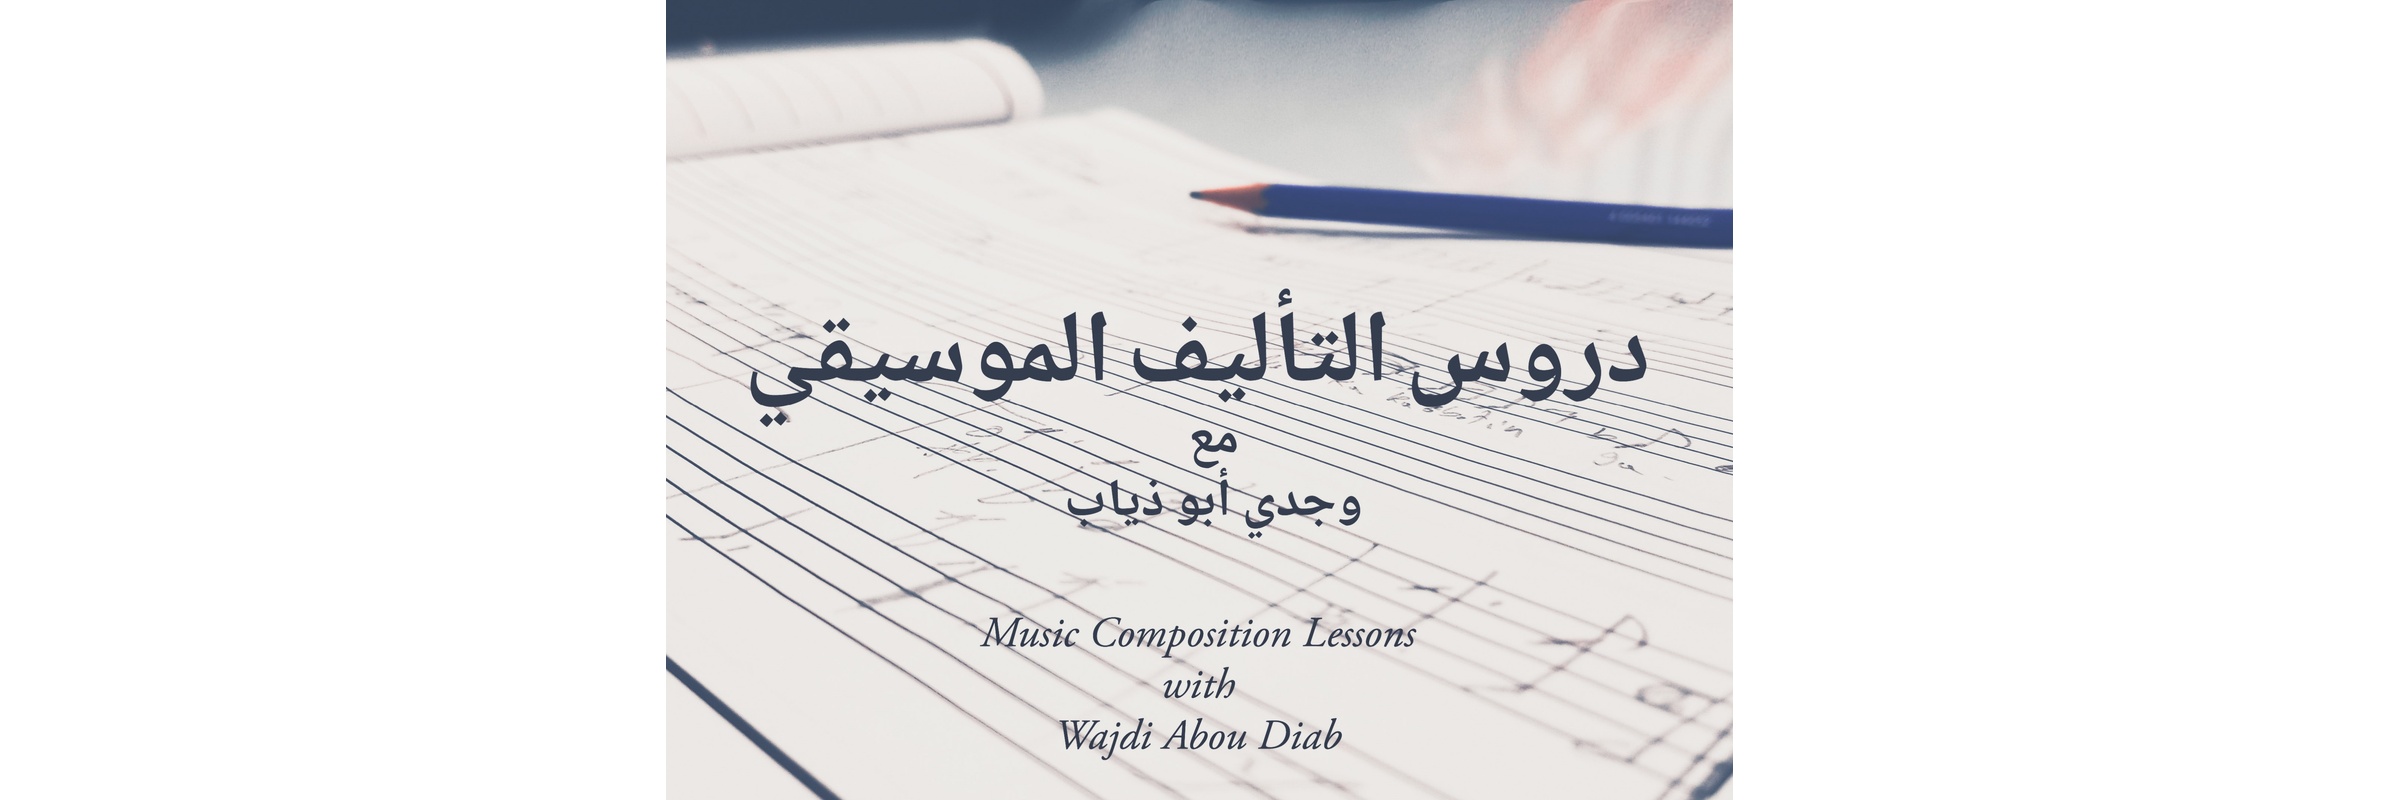 Wajdi AbouDiab - Music composition lessons - دروس التأليف الموسيقي